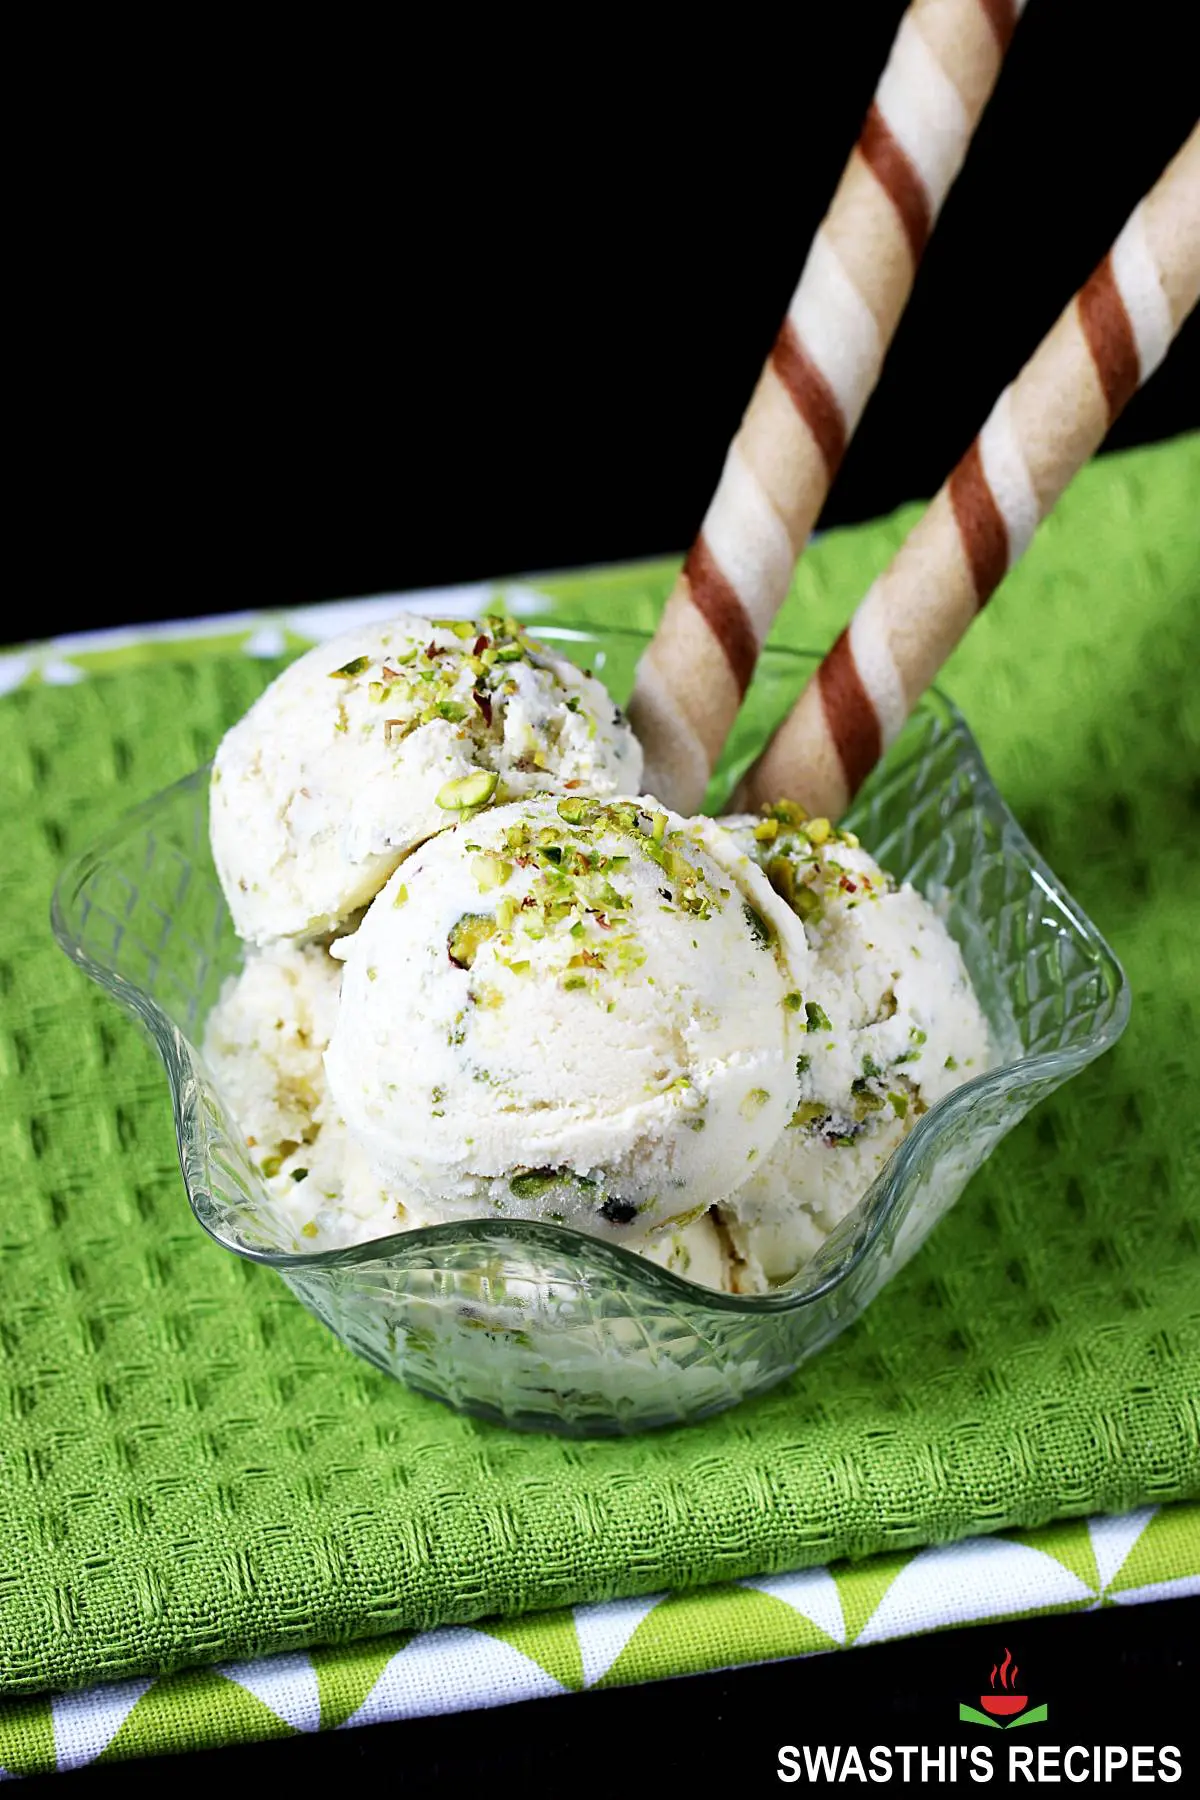 Pistachio ice cream made with pista, heavy cream, sugar, milk and vanilla essence